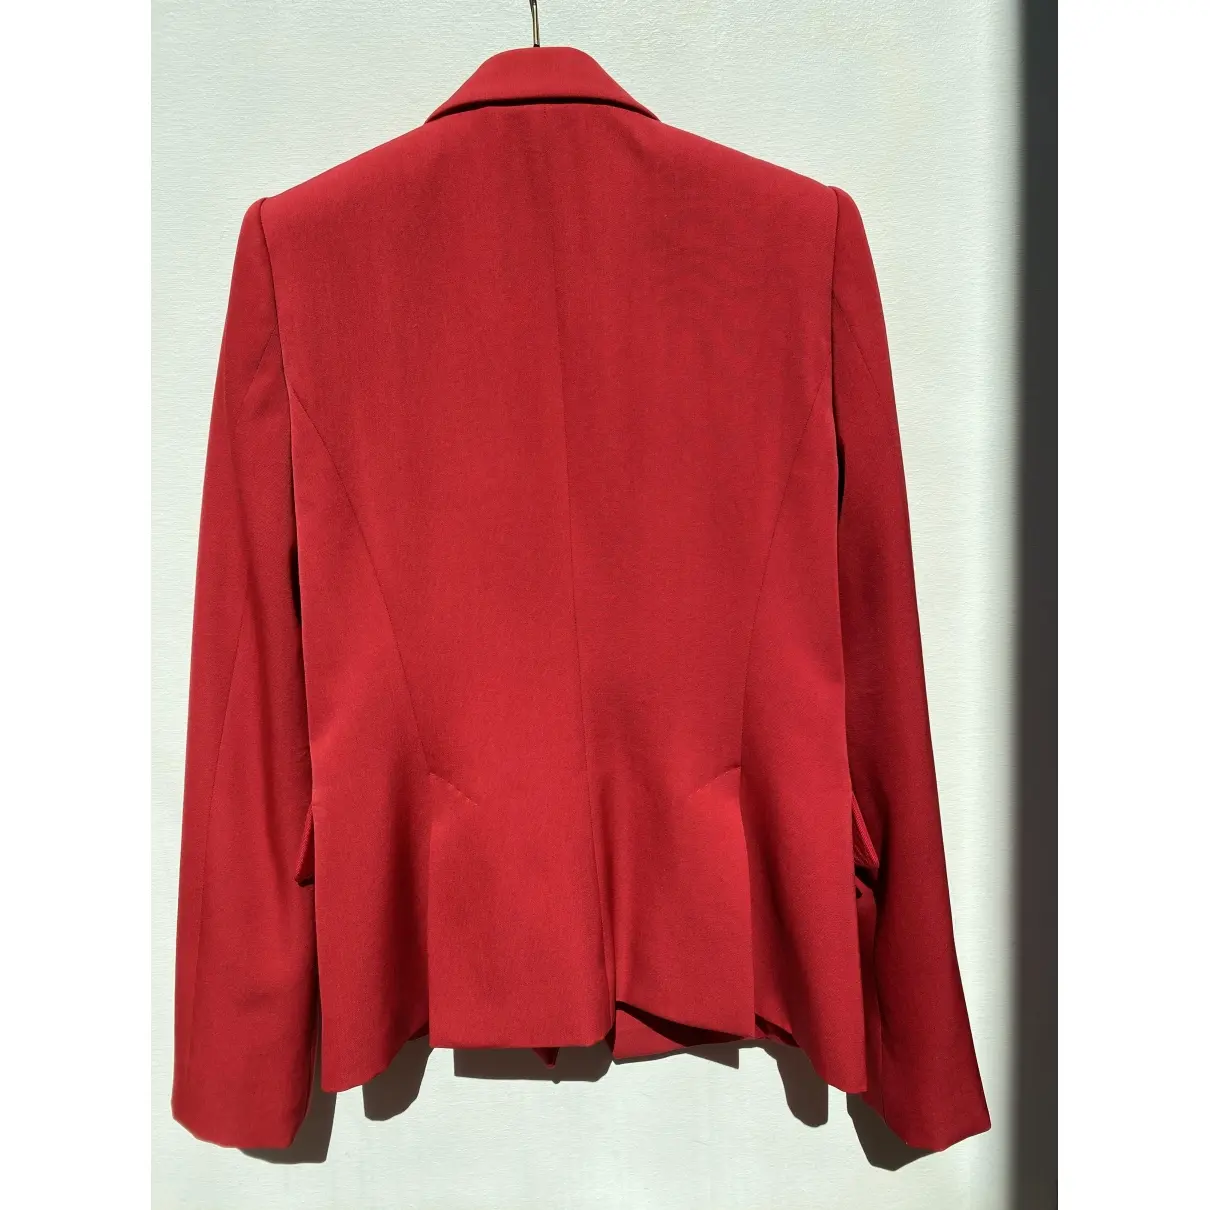 Buy Stella McCartney Red Wool Jacket online